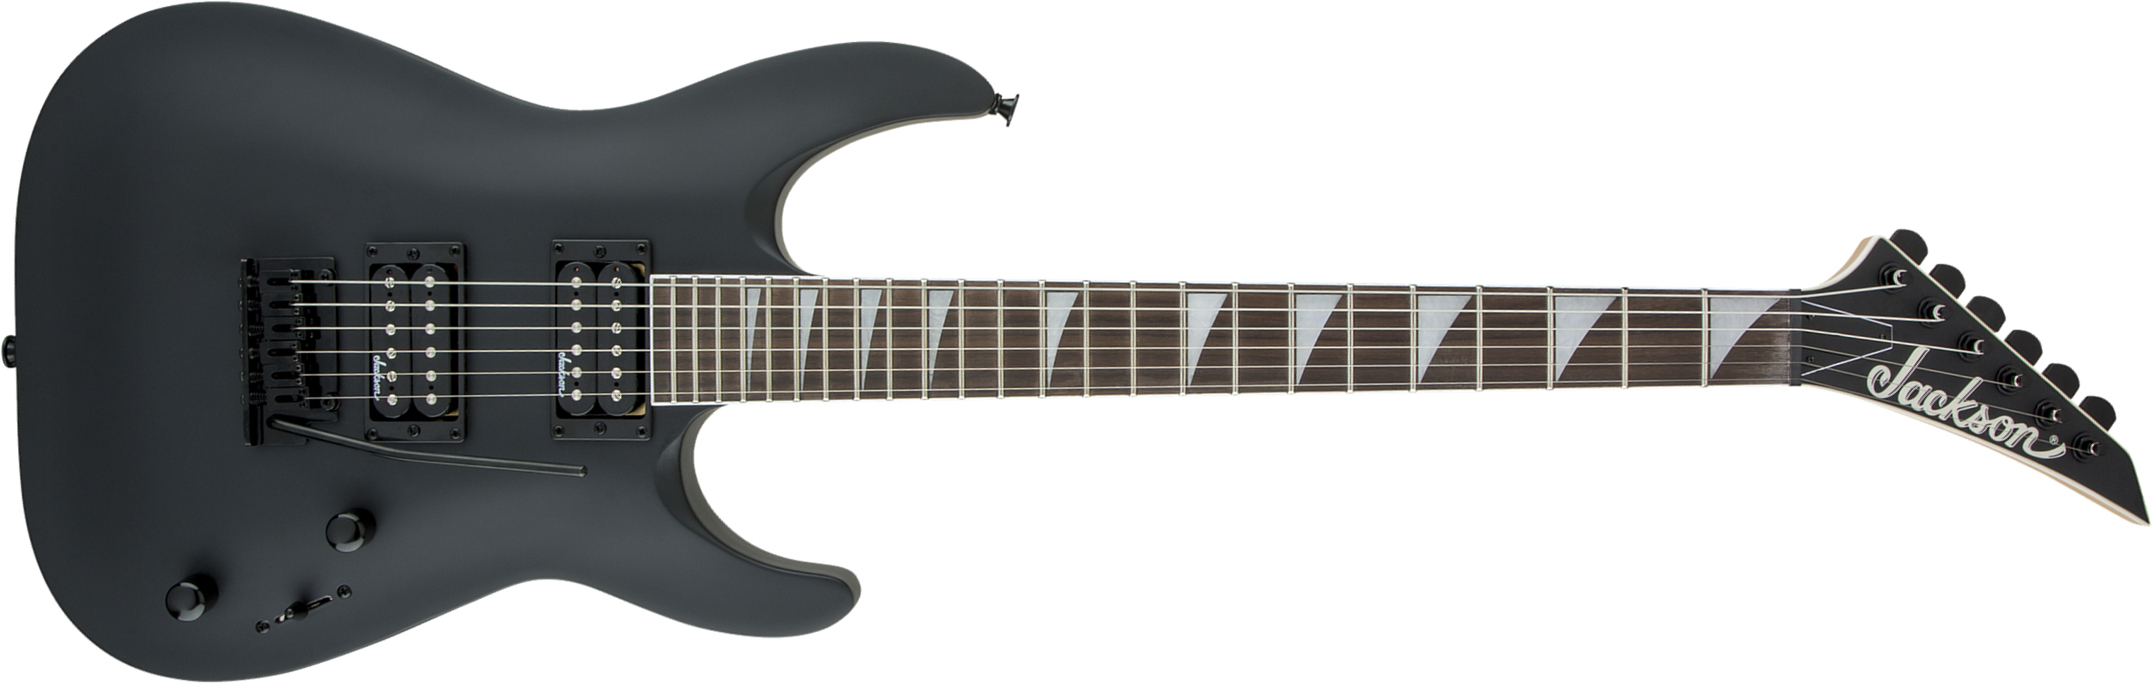 Jackson Dinky Arch Top Dka Js22 2h Trem Ama - Satin Black - Guitarra electrica metalica - Main picture